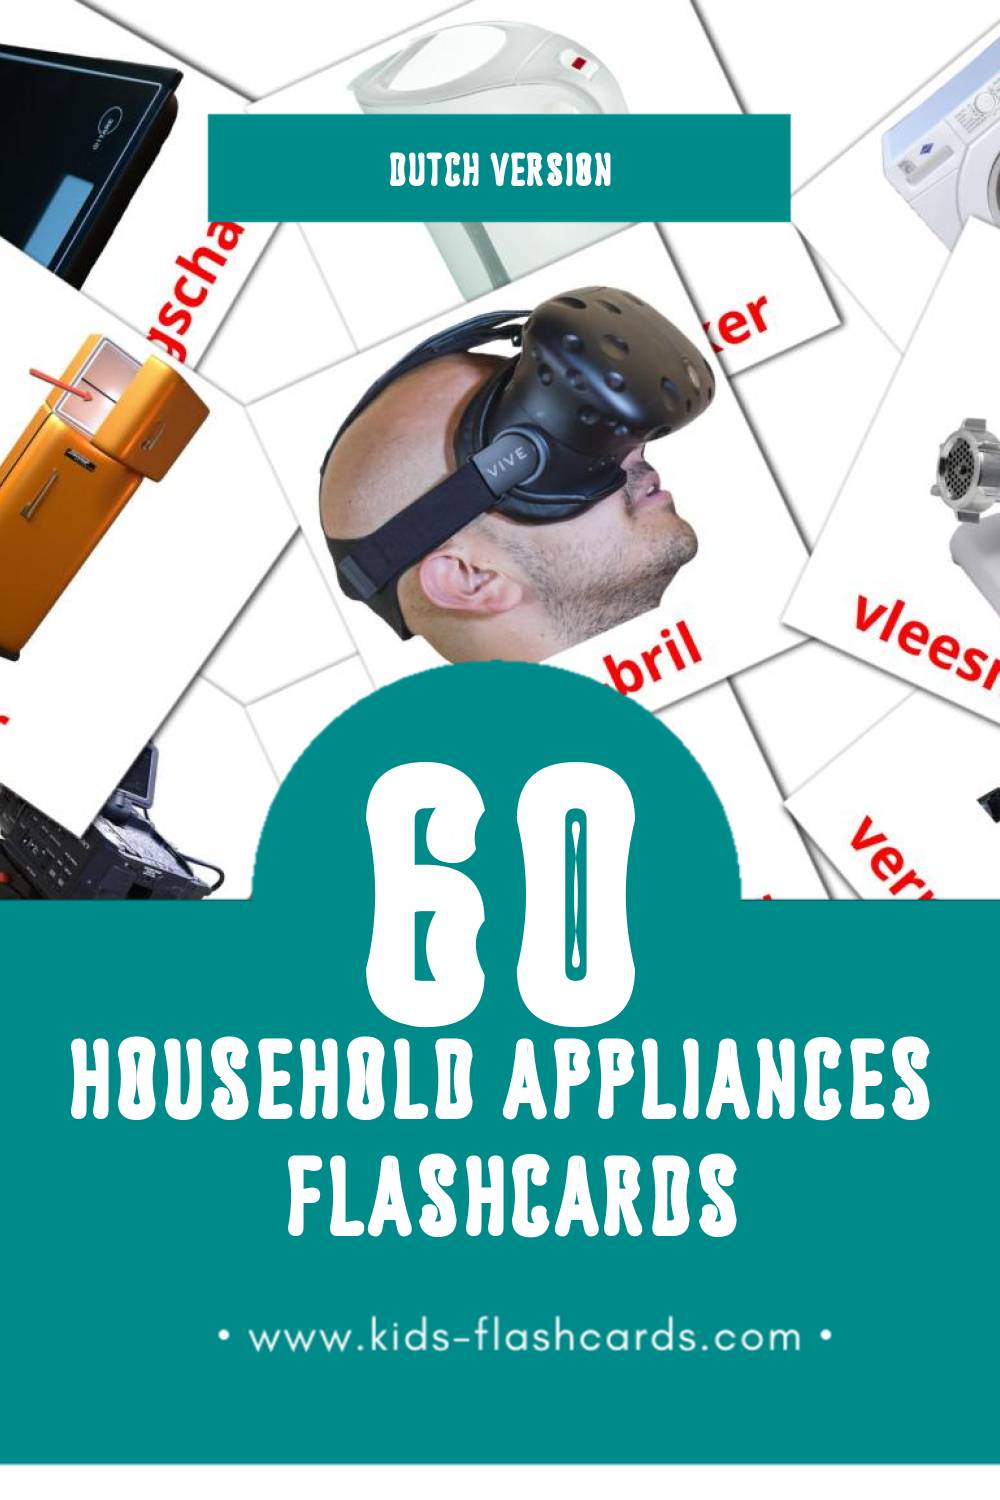 Visual Huishoudelijke apparaten Flashcards for Toddlers (61 cards in Dutch)